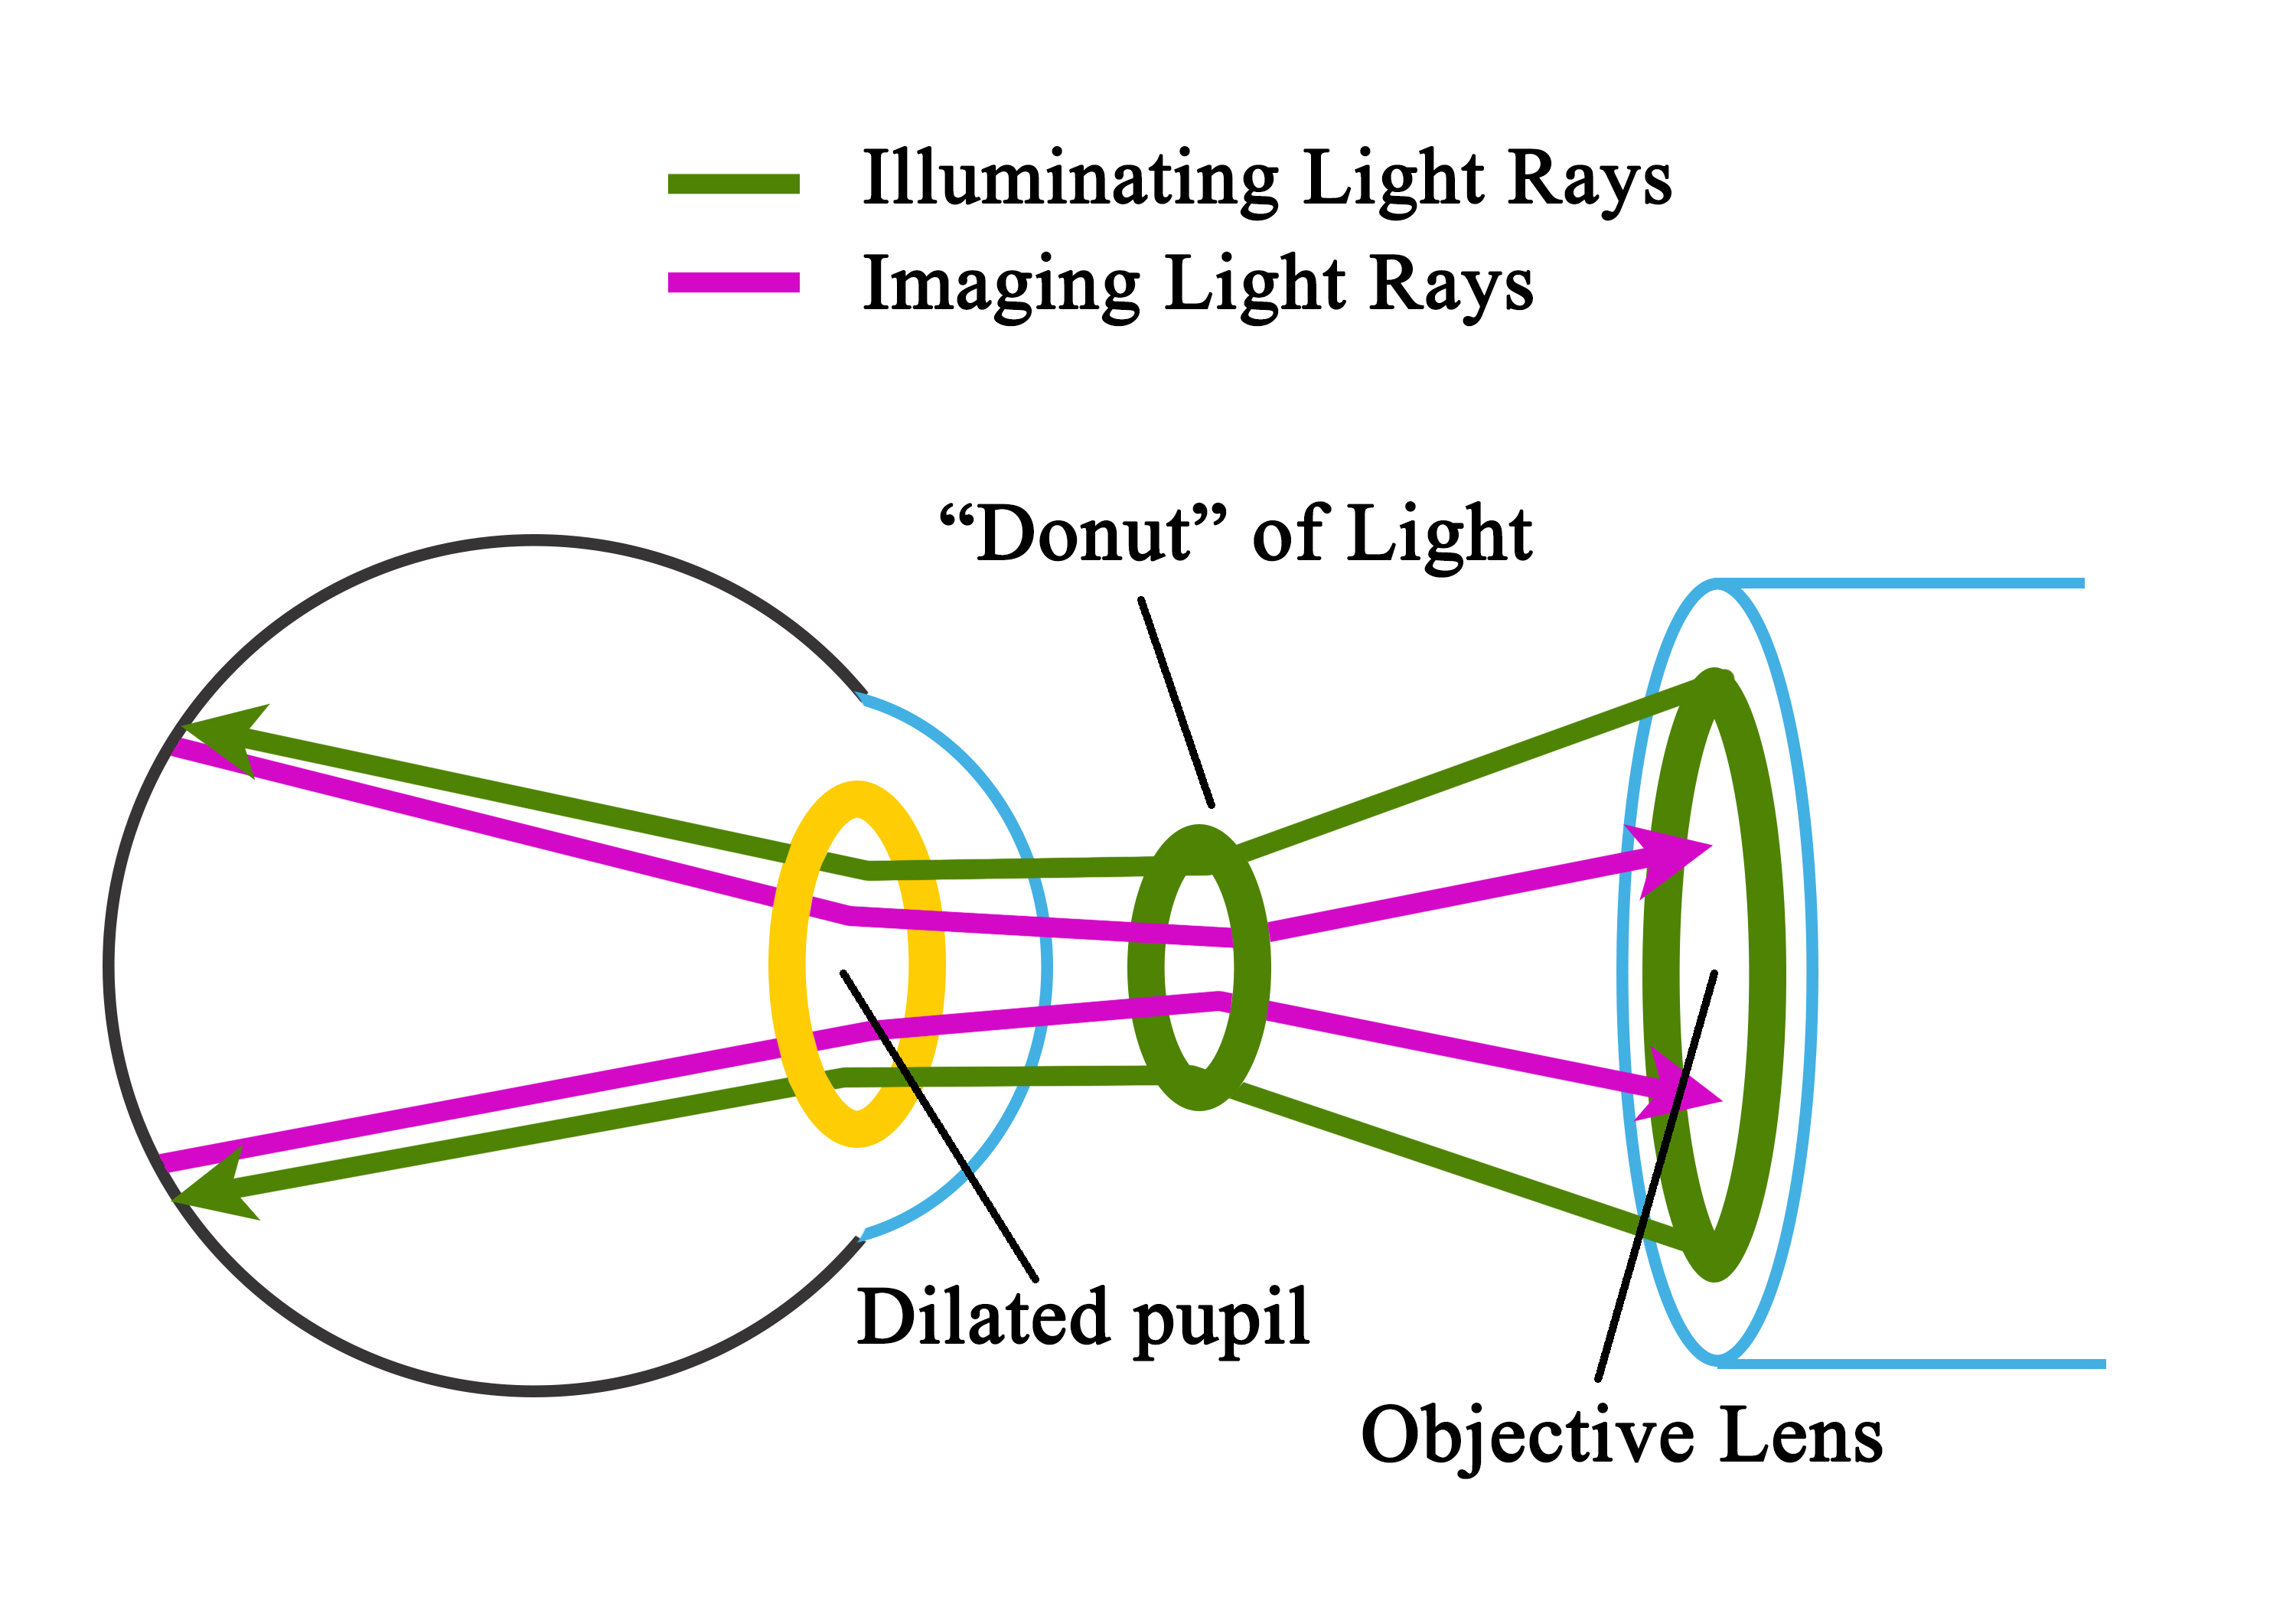 Illumination and imaging of the retina through the pupil